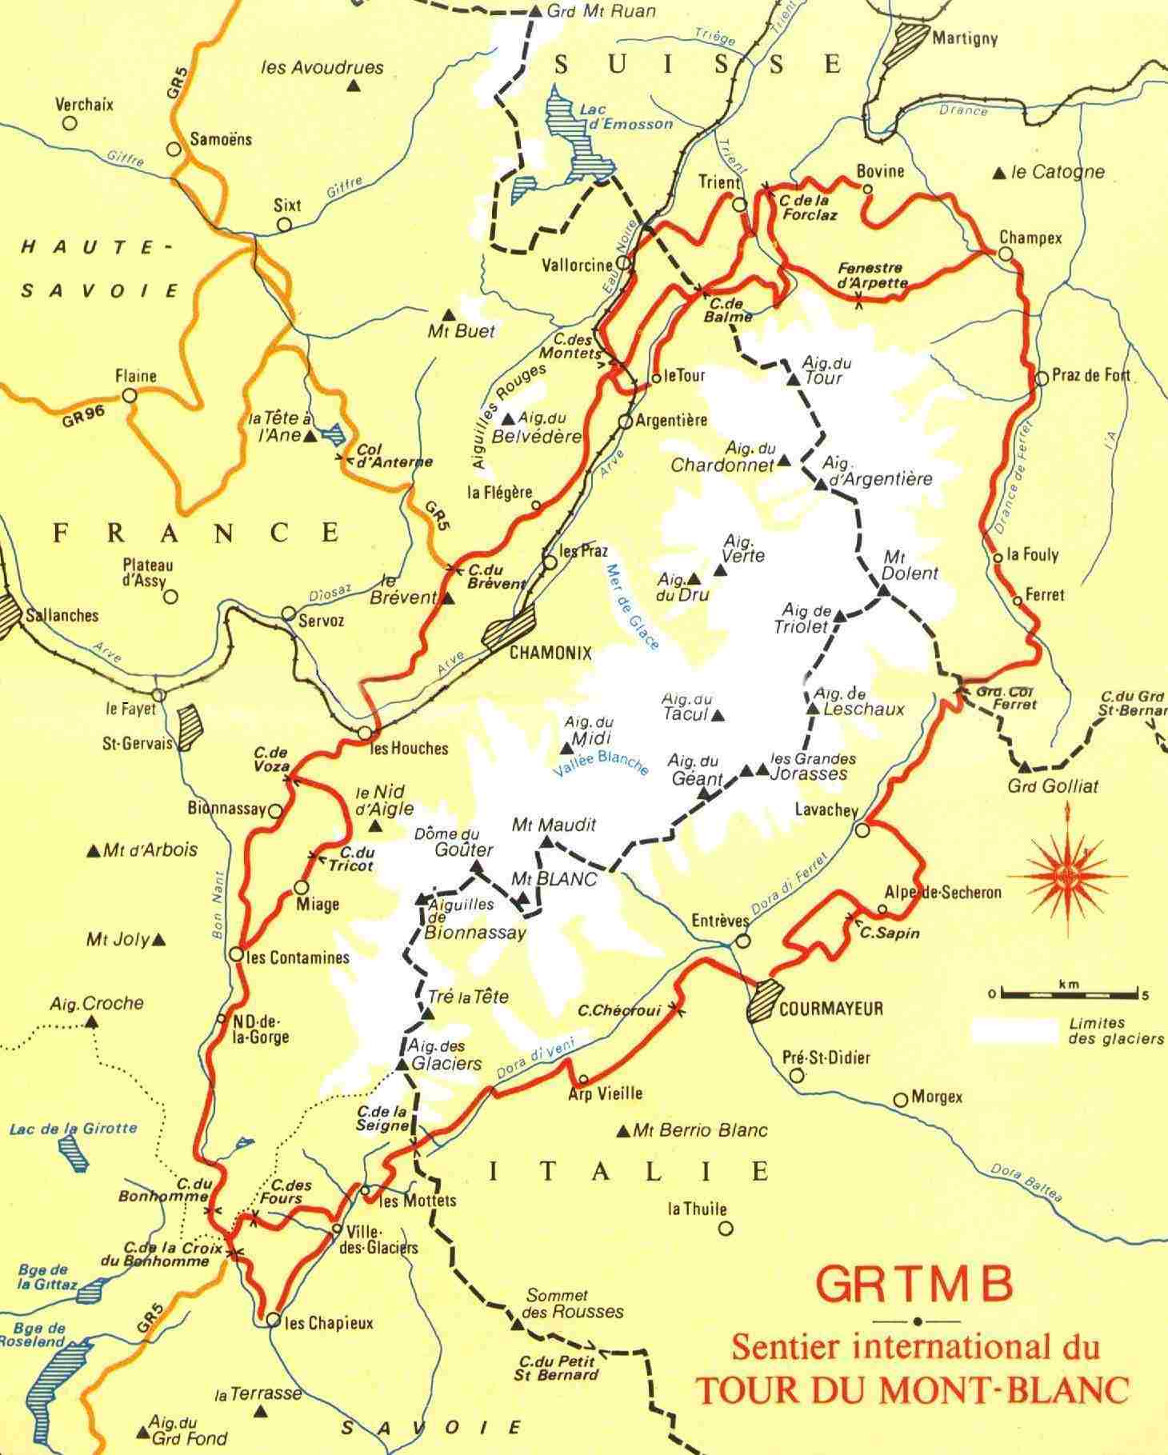 Kaart van de Tour du Mont Blanc